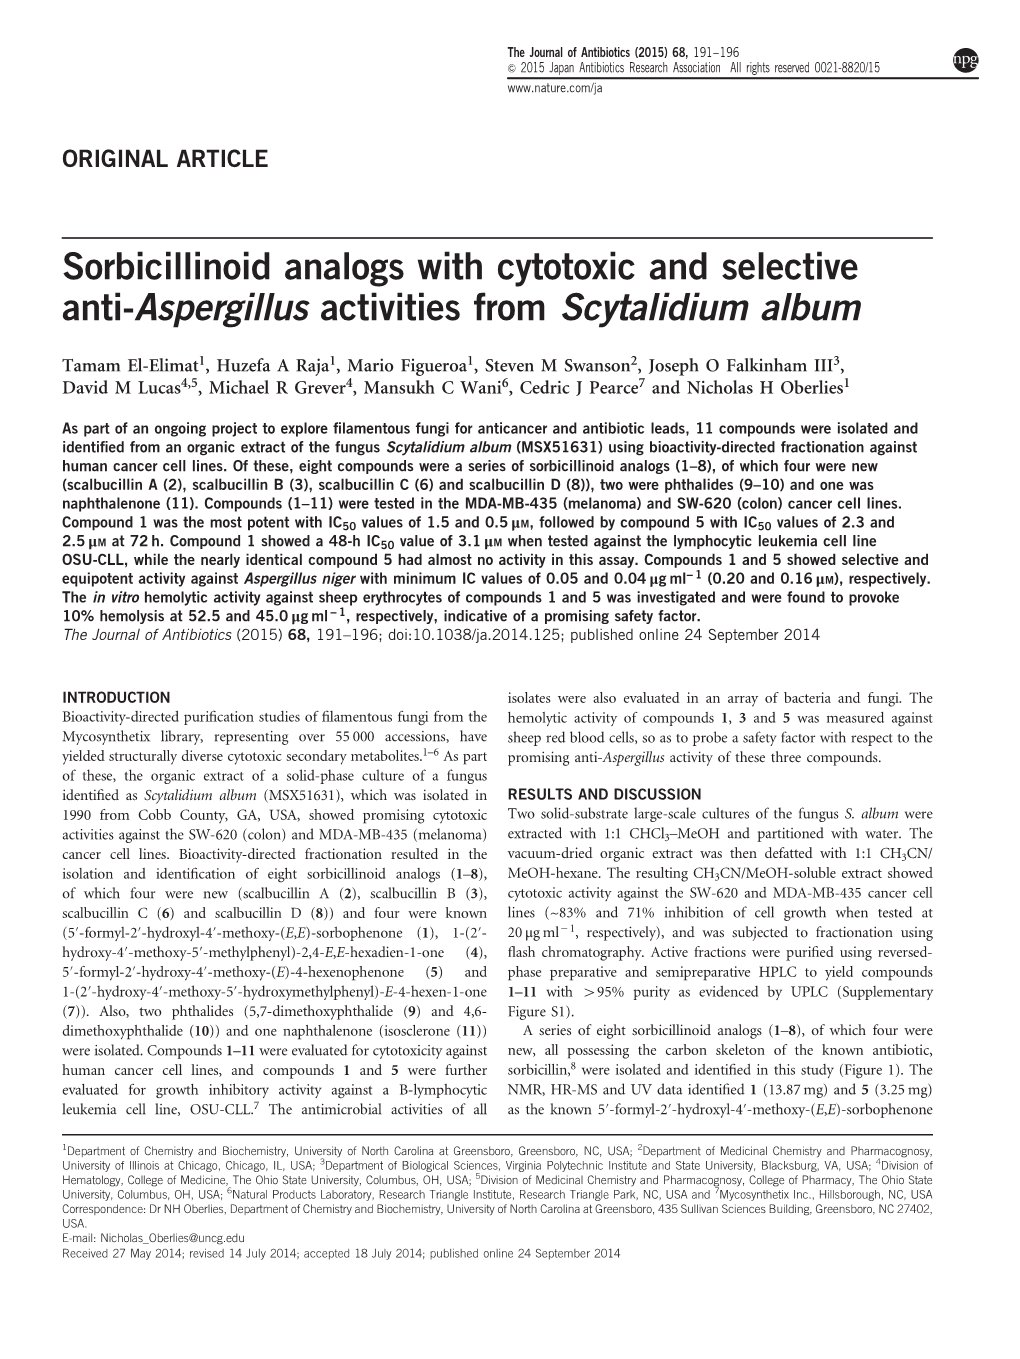 Sorbicillinoid Analogs with Cytotoxic and Selective Anti-Aspergillus Activities from Scytalidium Album